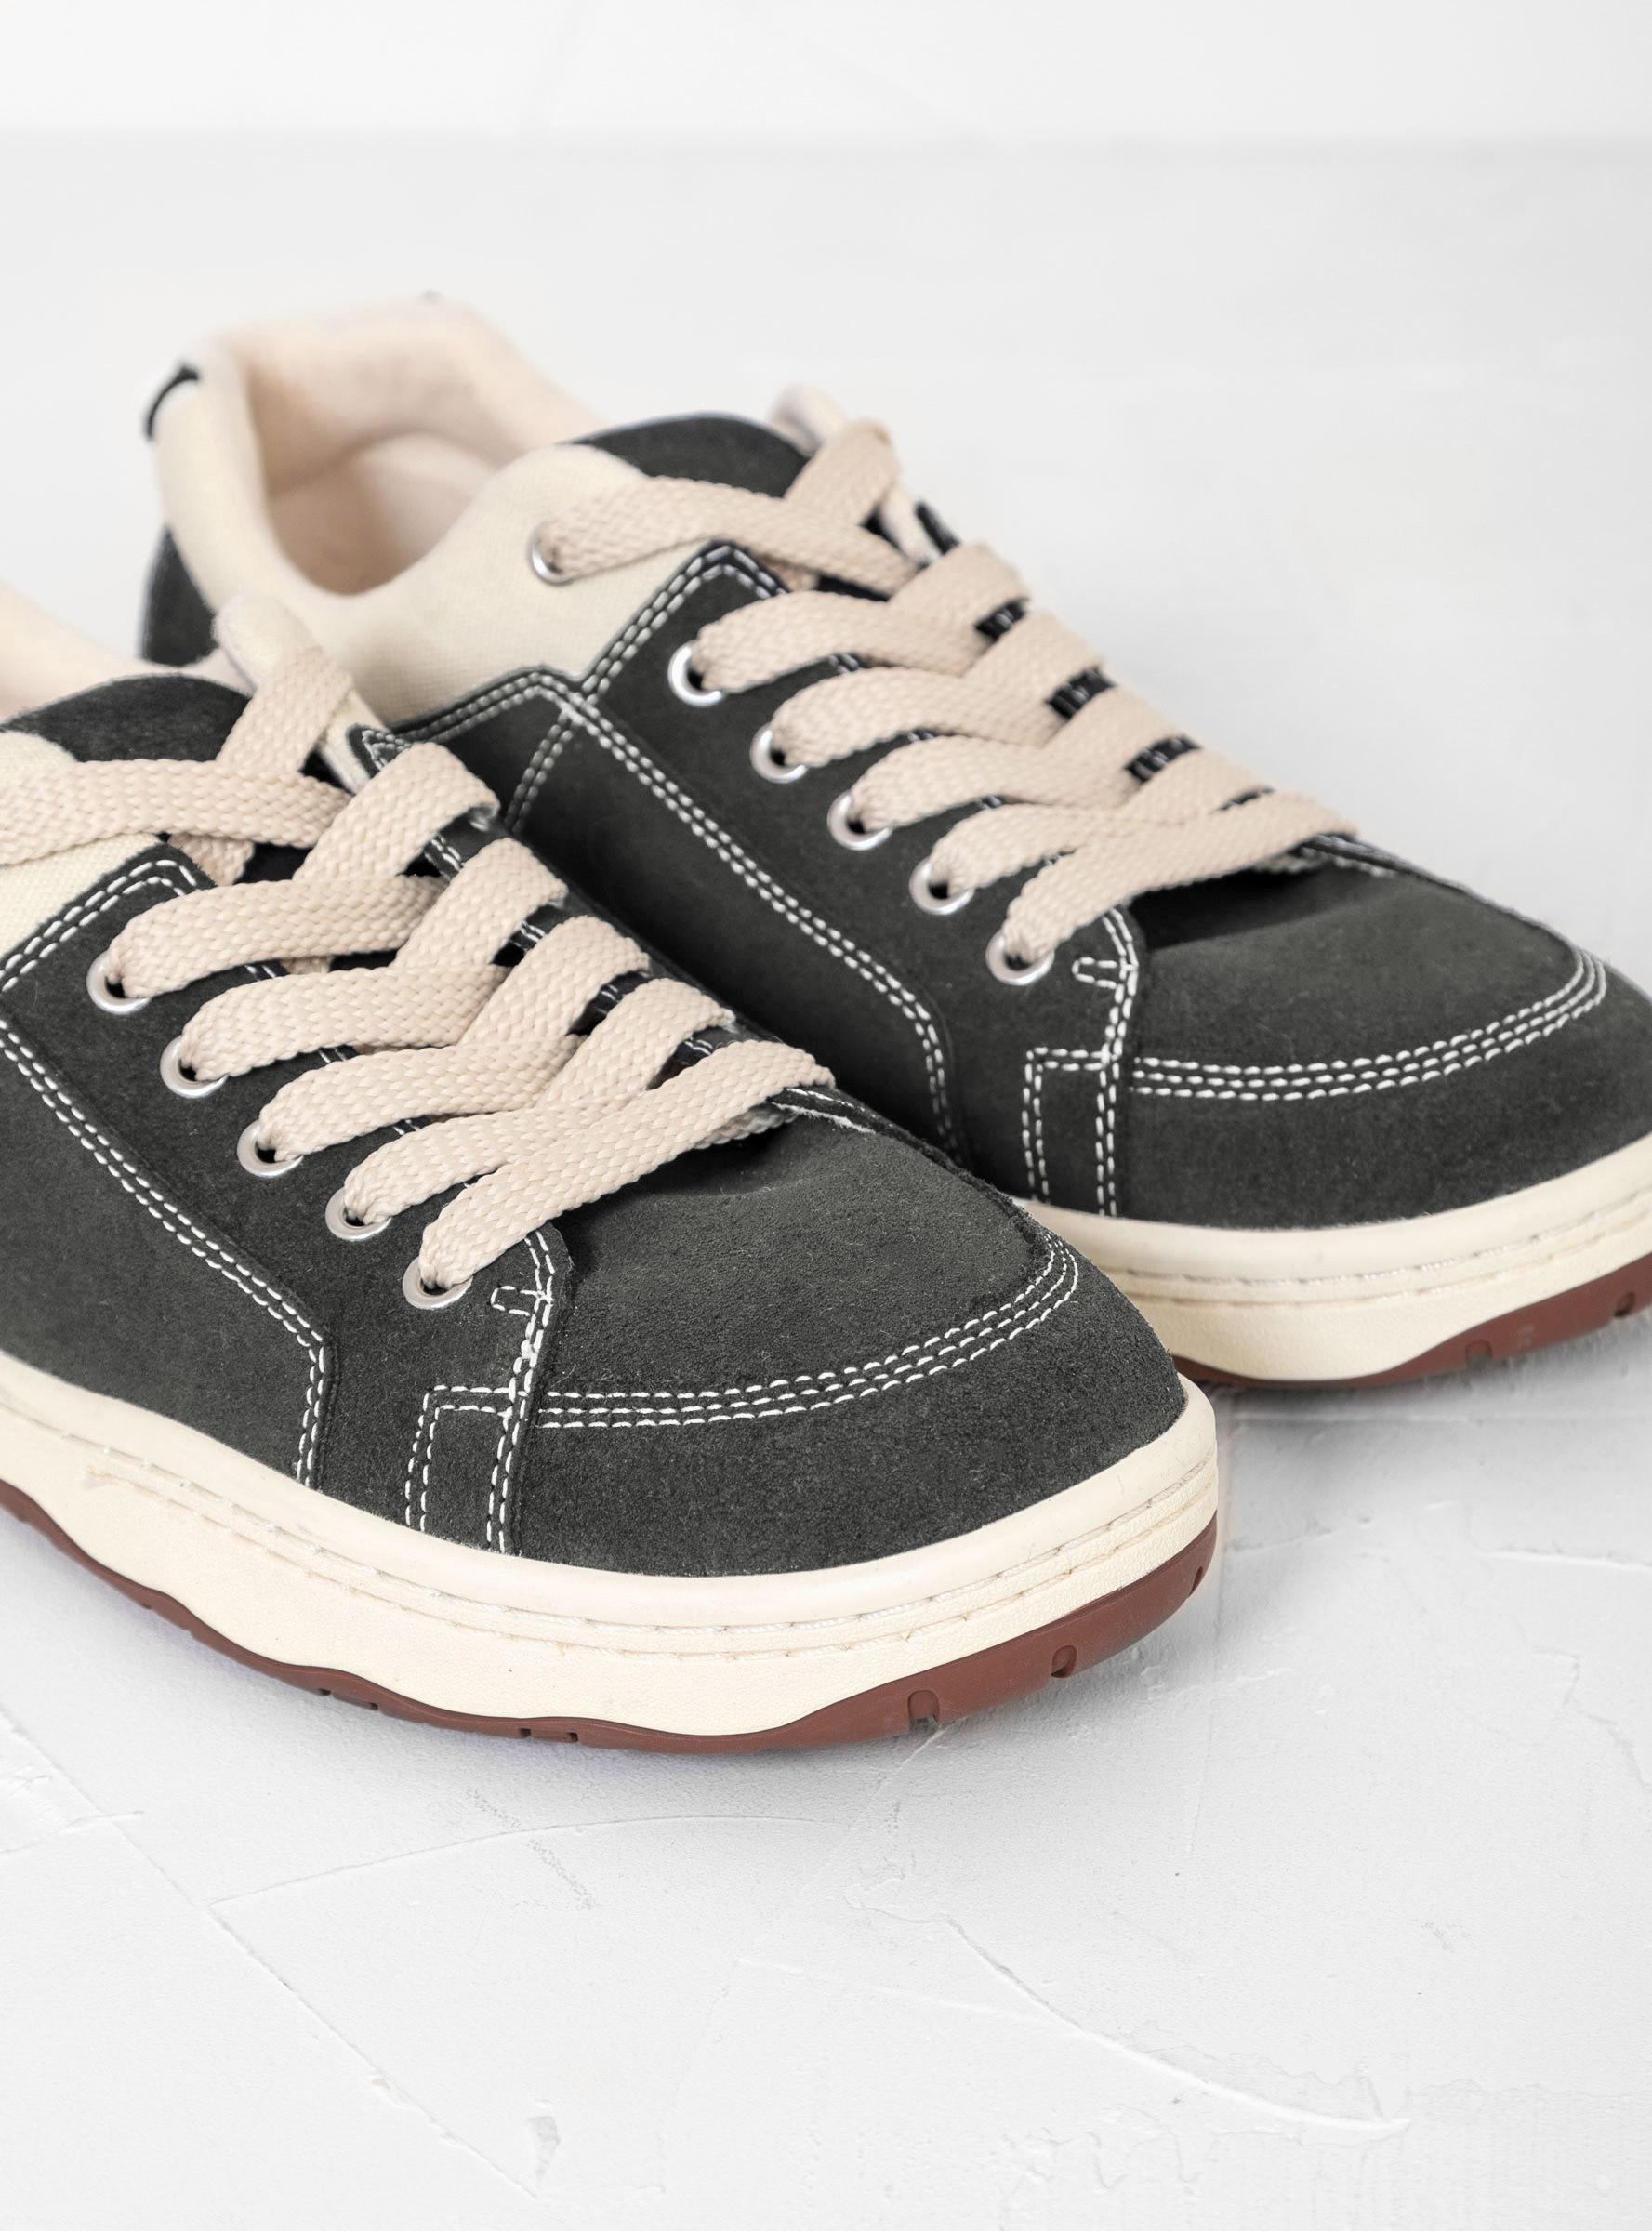 Simple Suede Os Sneaker Steel Grey in Gray for Men - Lyst